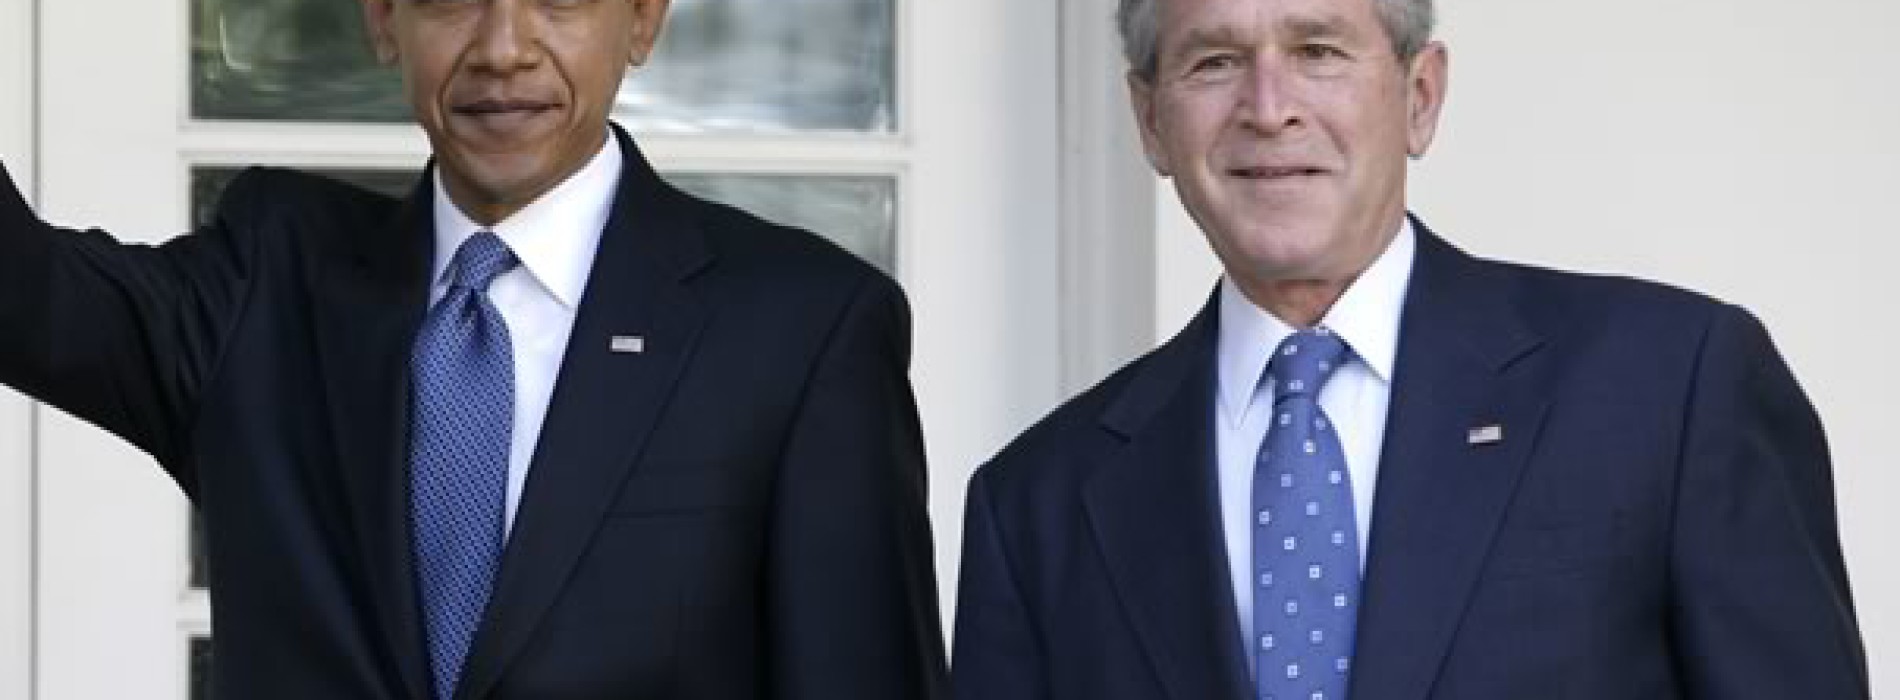 Surprise! America prefers George W. Bush over Barack Obama.